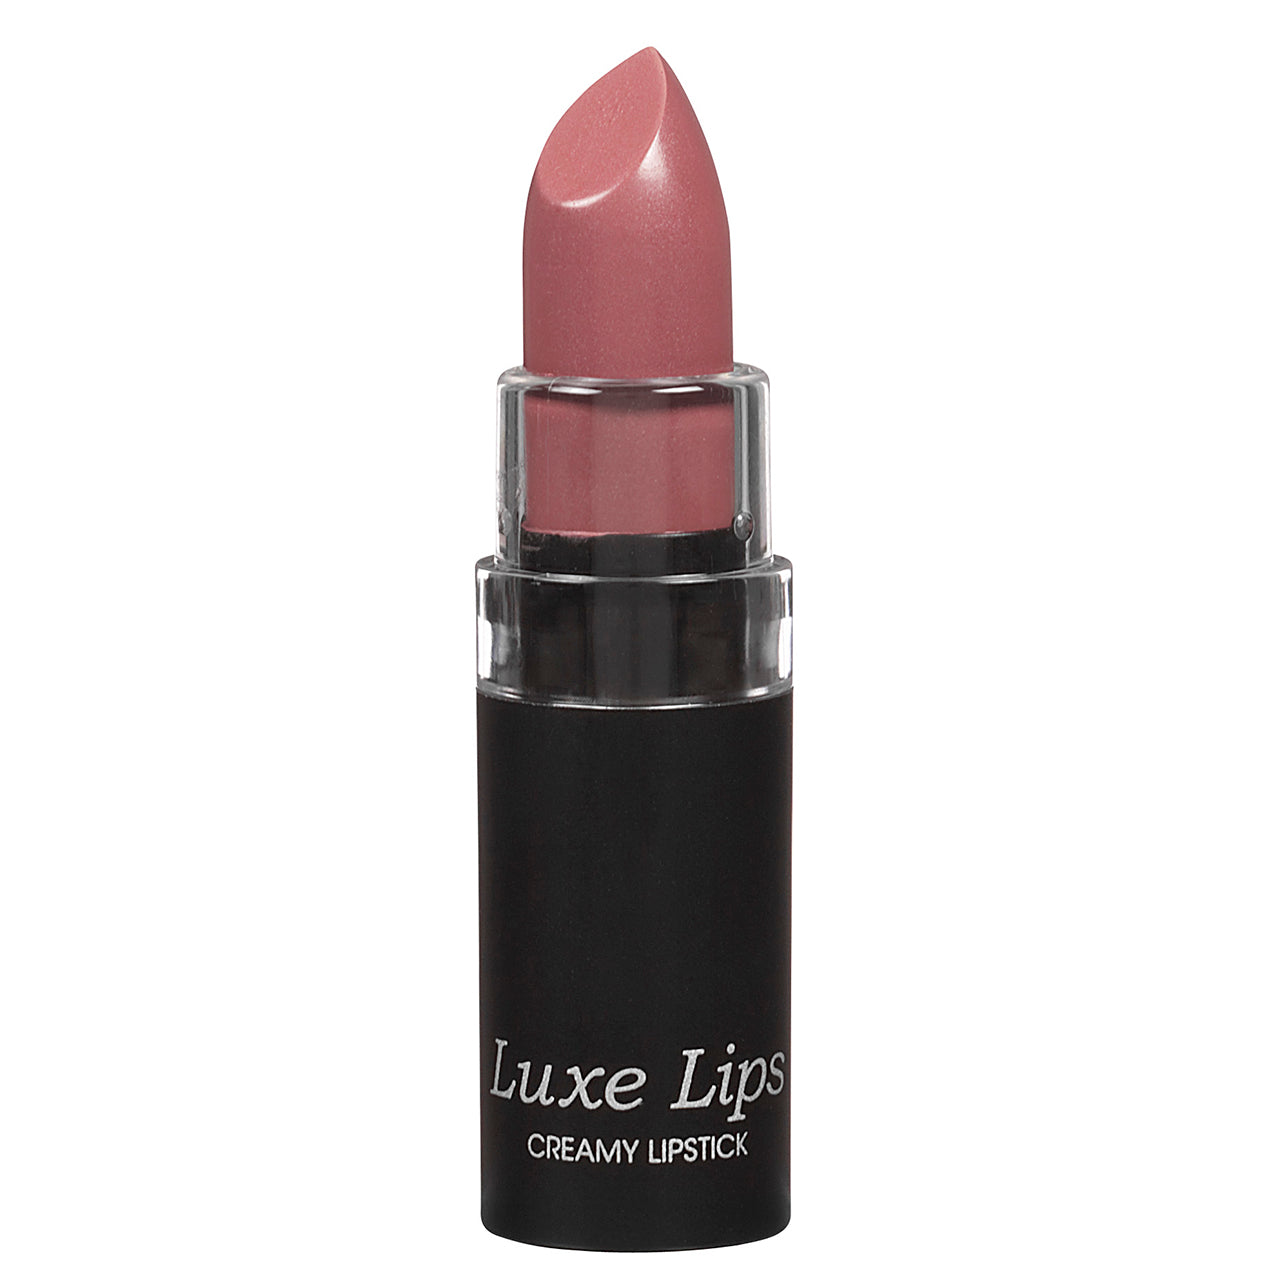 Styli-Style Cosmetics Luxe Lips Creamy Lipstick - Spiced Mauve - ADDROS.COM